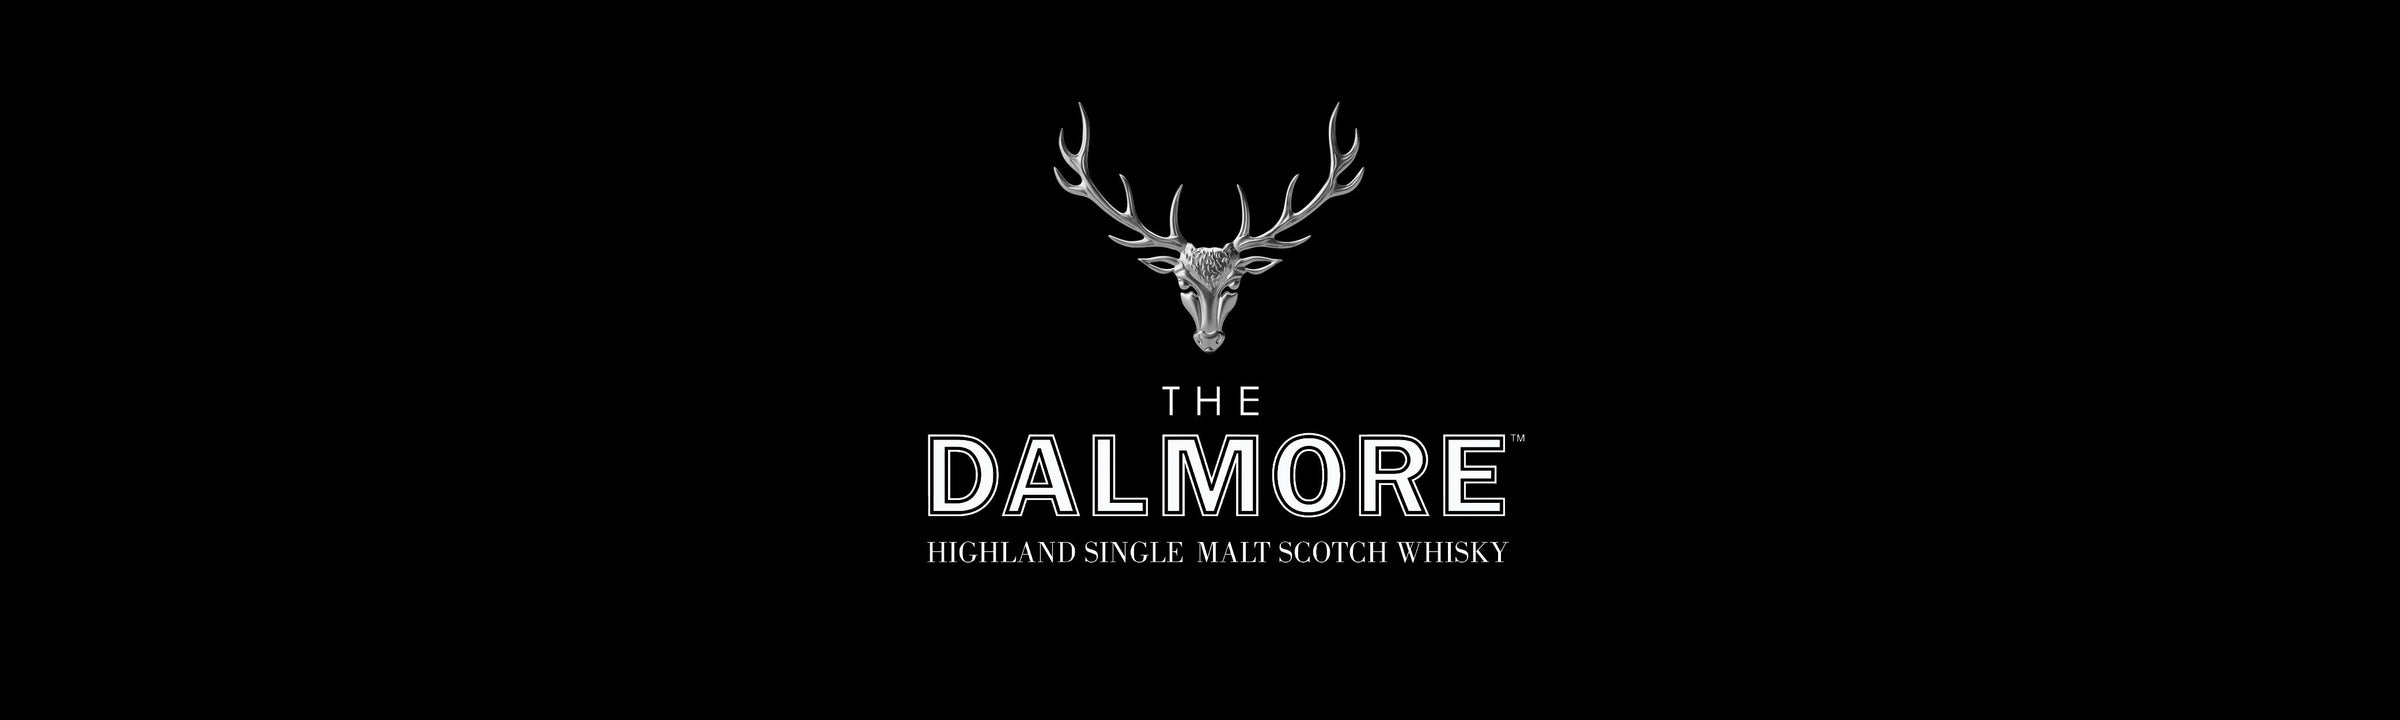 The Dalmore Scotch Whisky Logo on Black Background